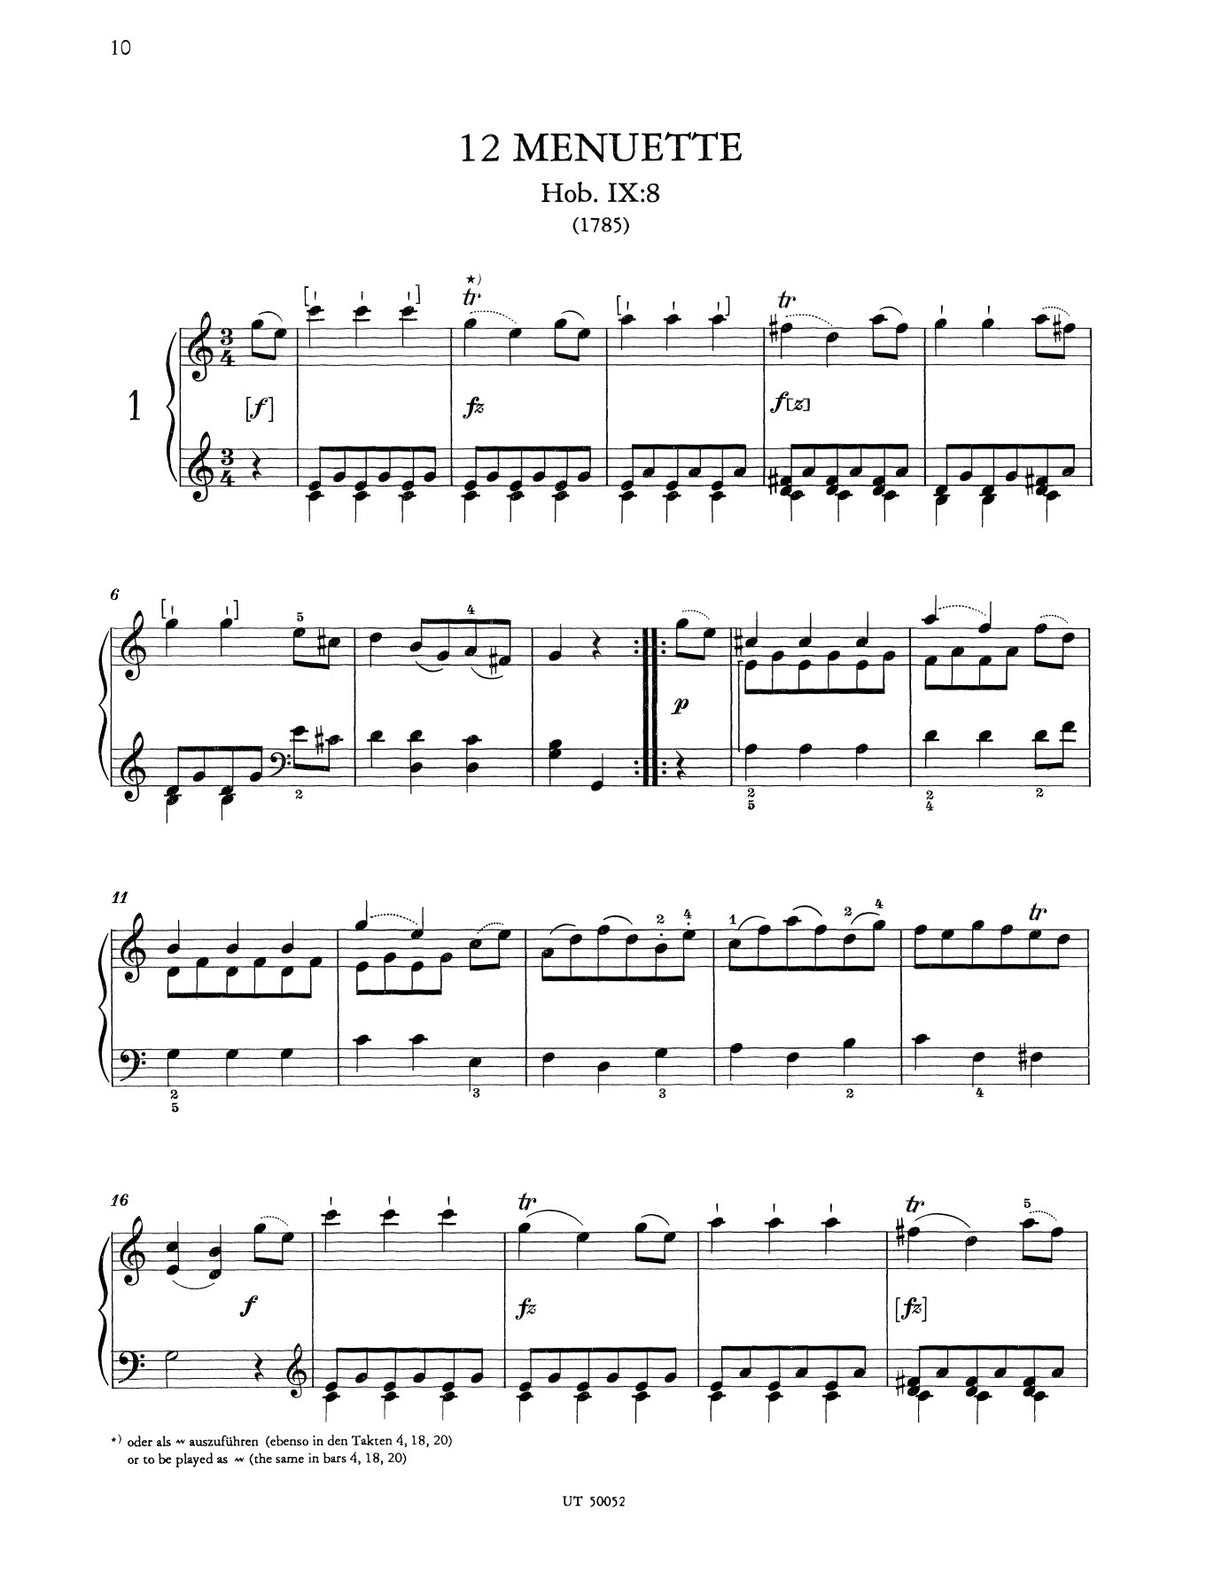 Haydn: Dances for Piano, Hob. IX:3, 8, 11, 12